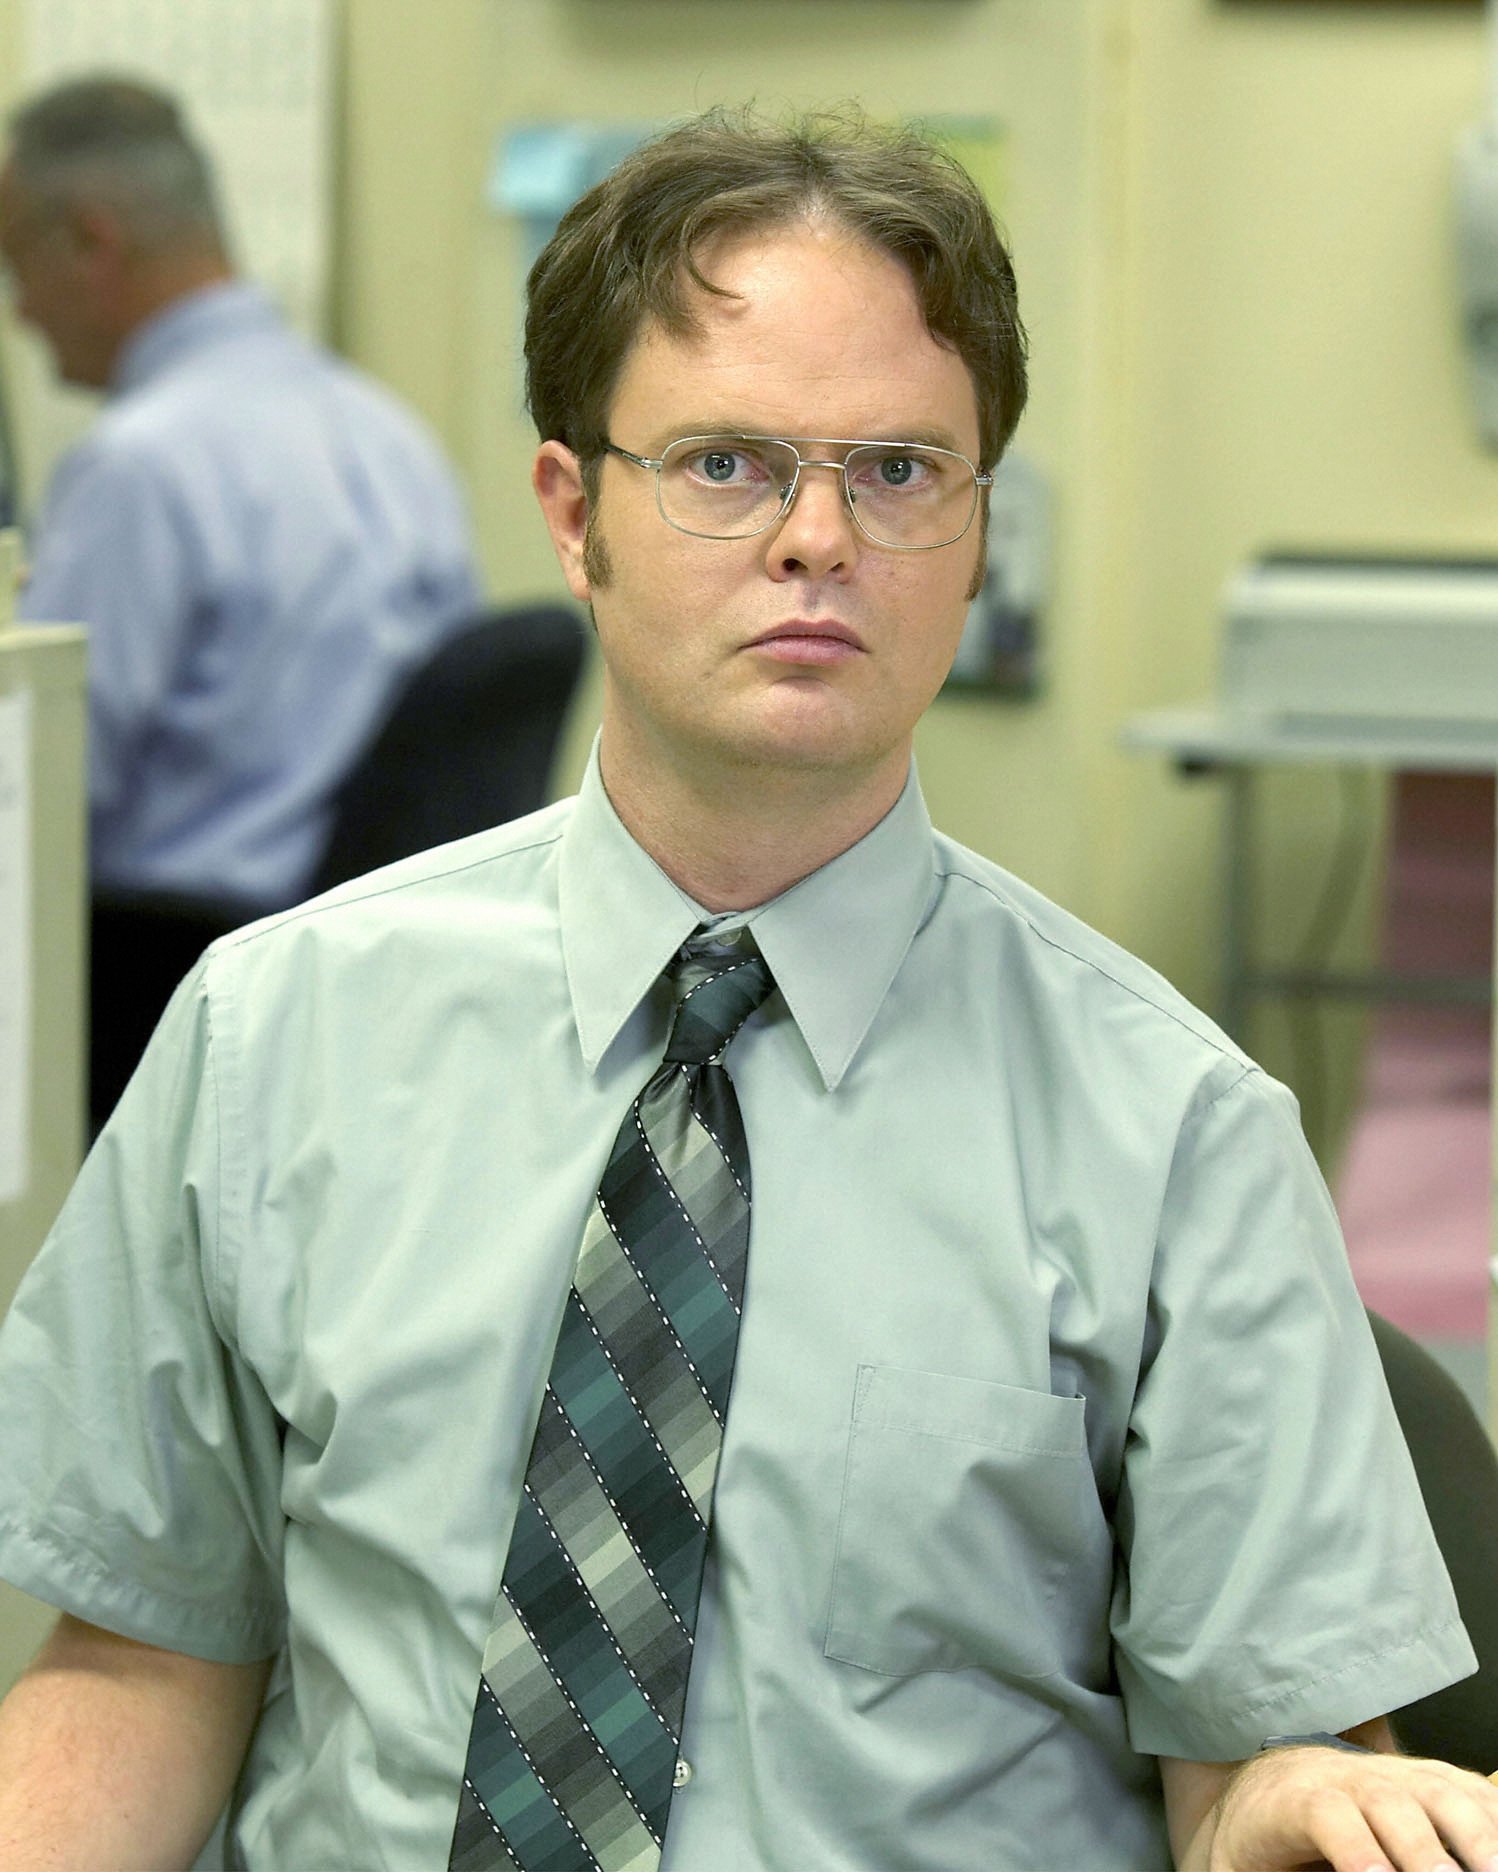 Dwight (NBC)